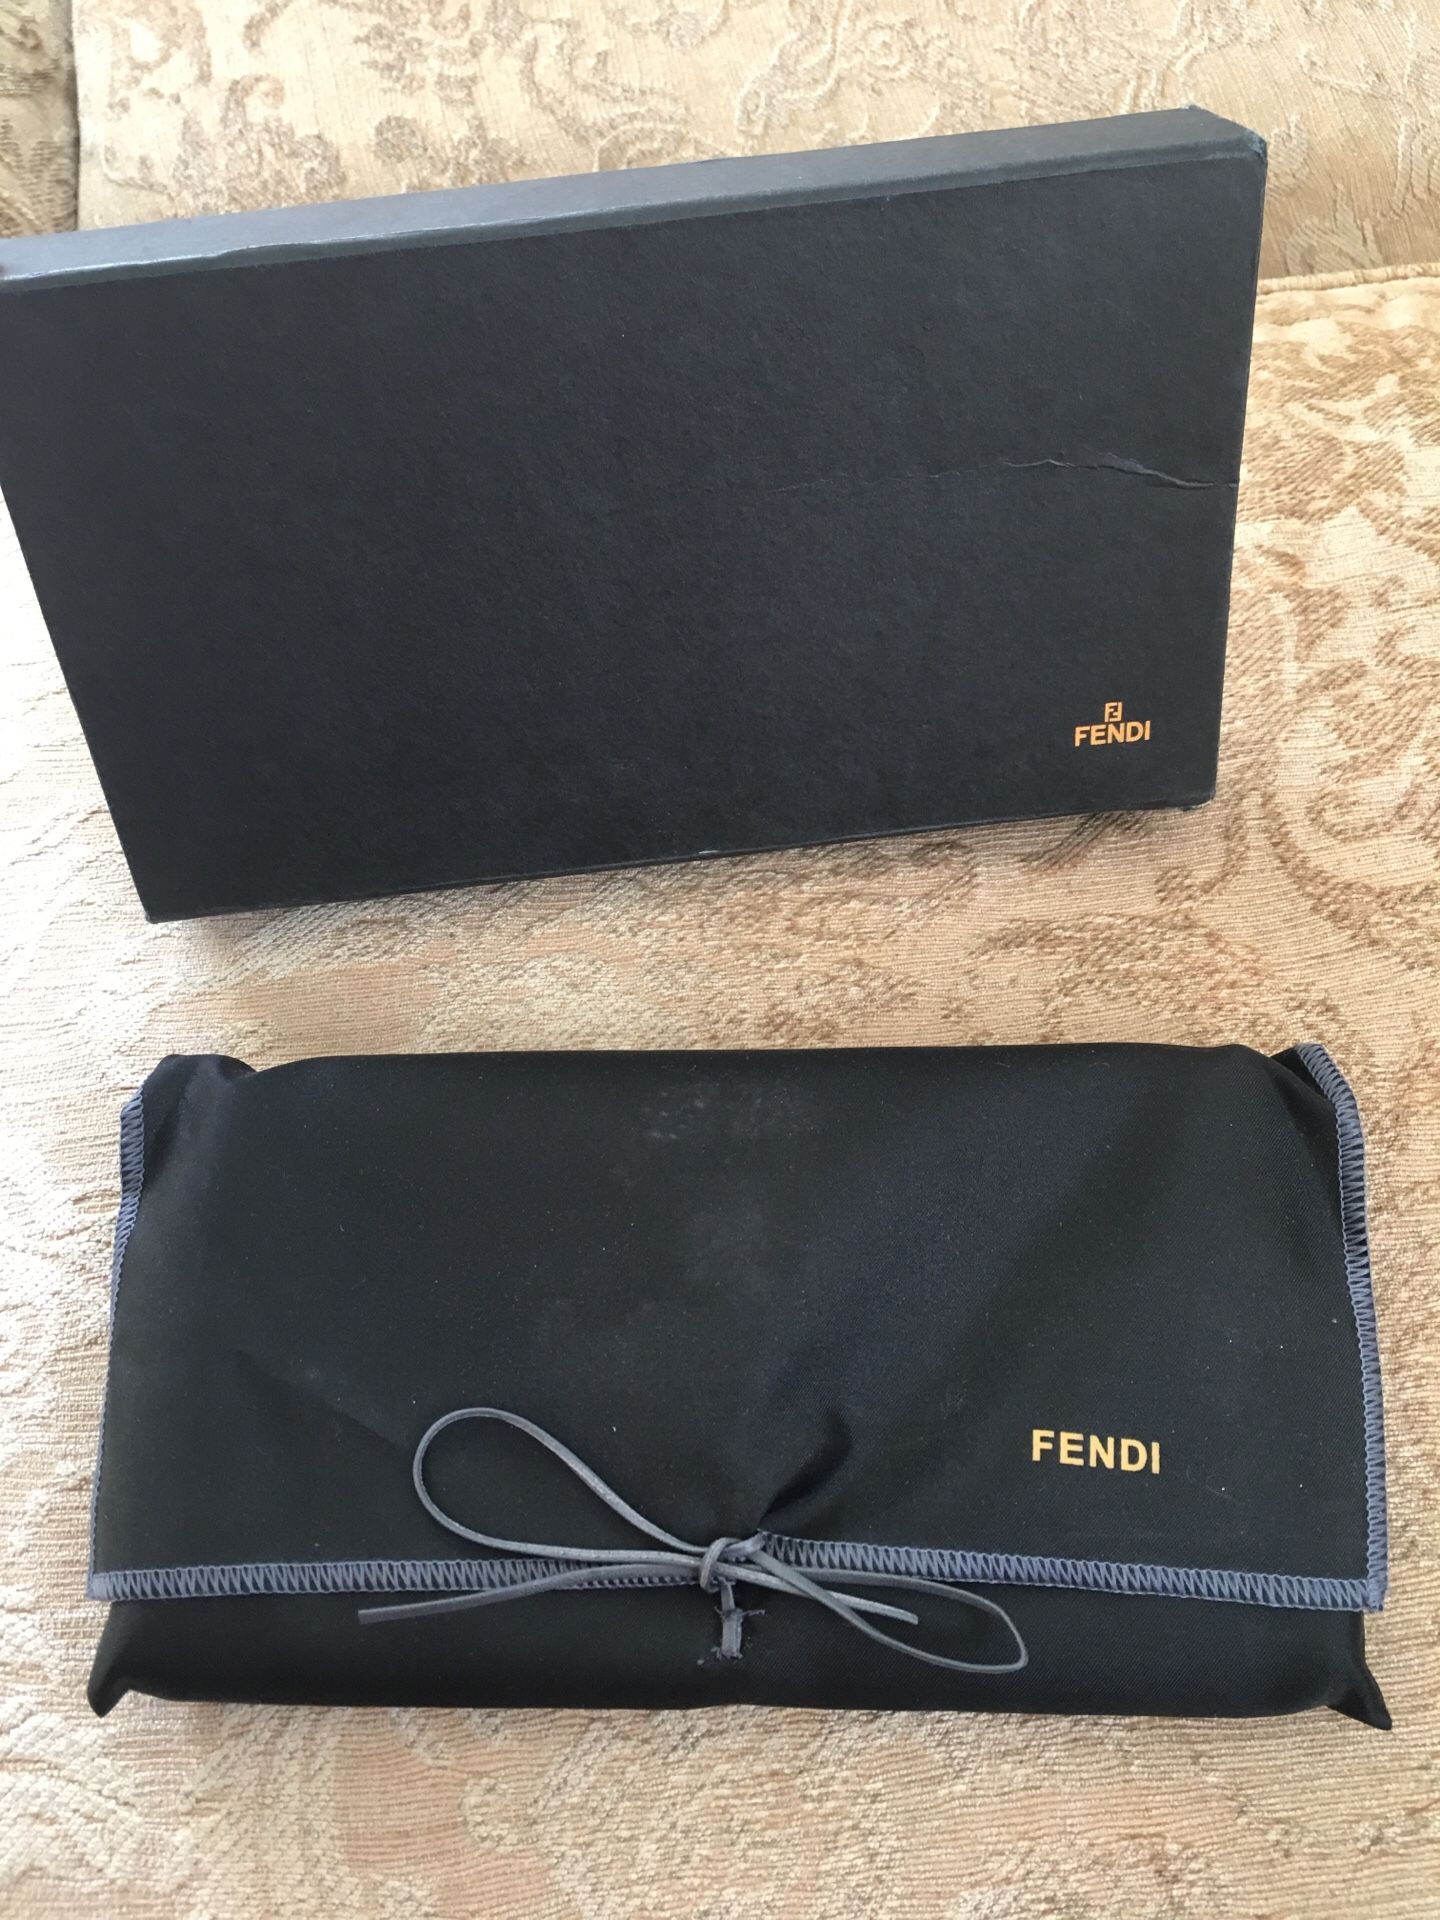 FENDI Large Wallet-New!